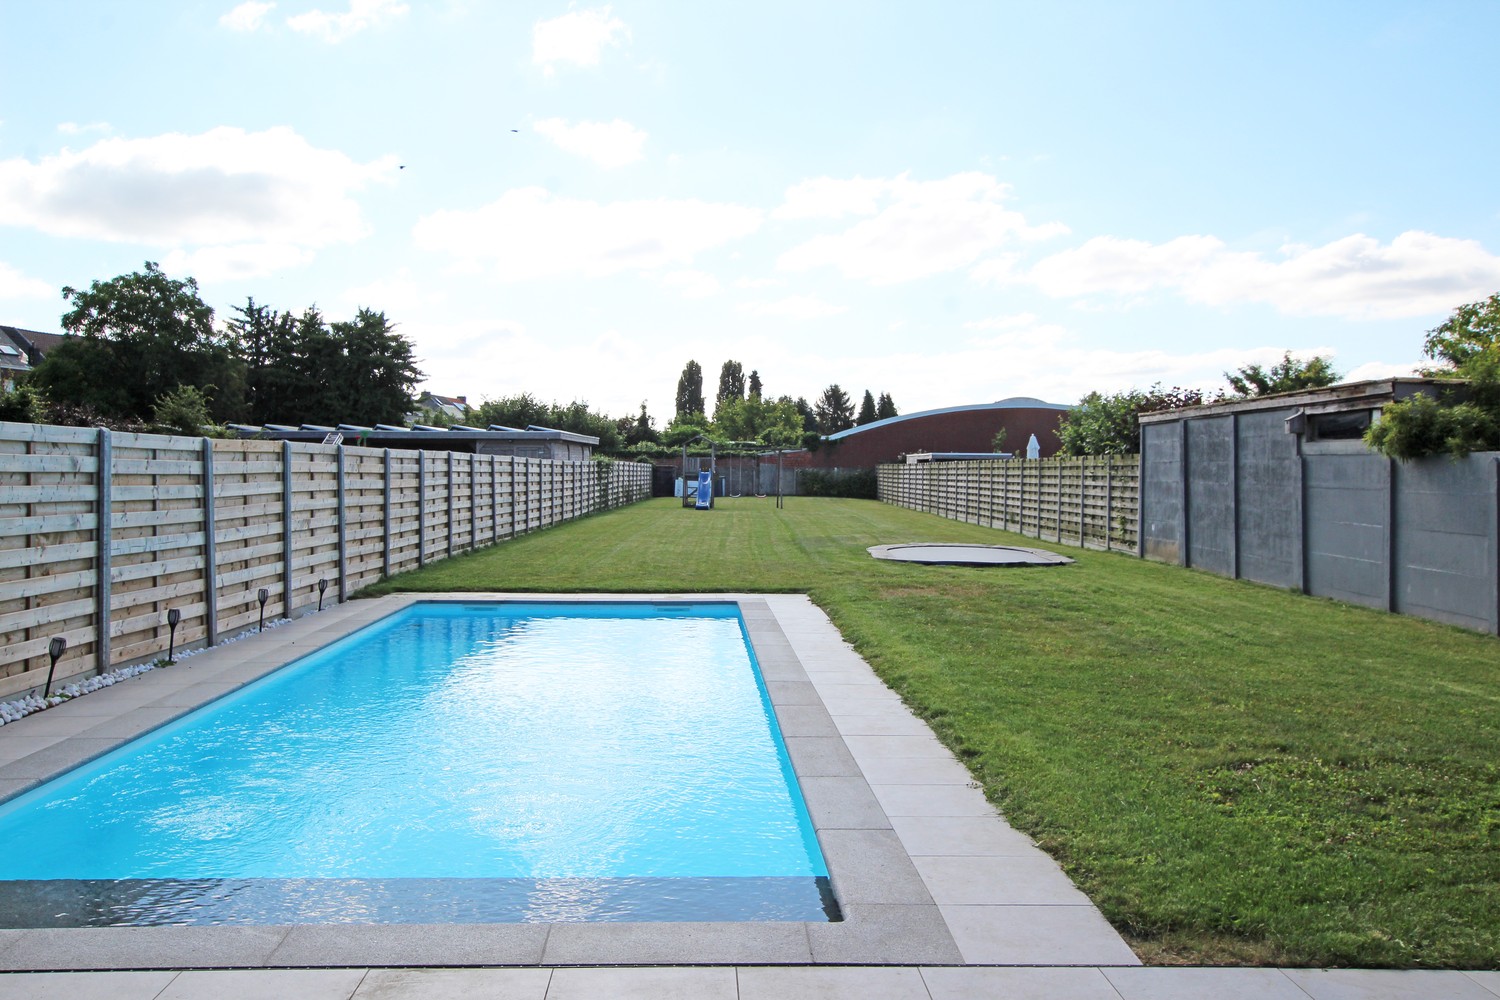 Verrassend ruime woning met riante tuin (774m²) en verwarmd zwembad in hartje Broechem! afbeelding 25